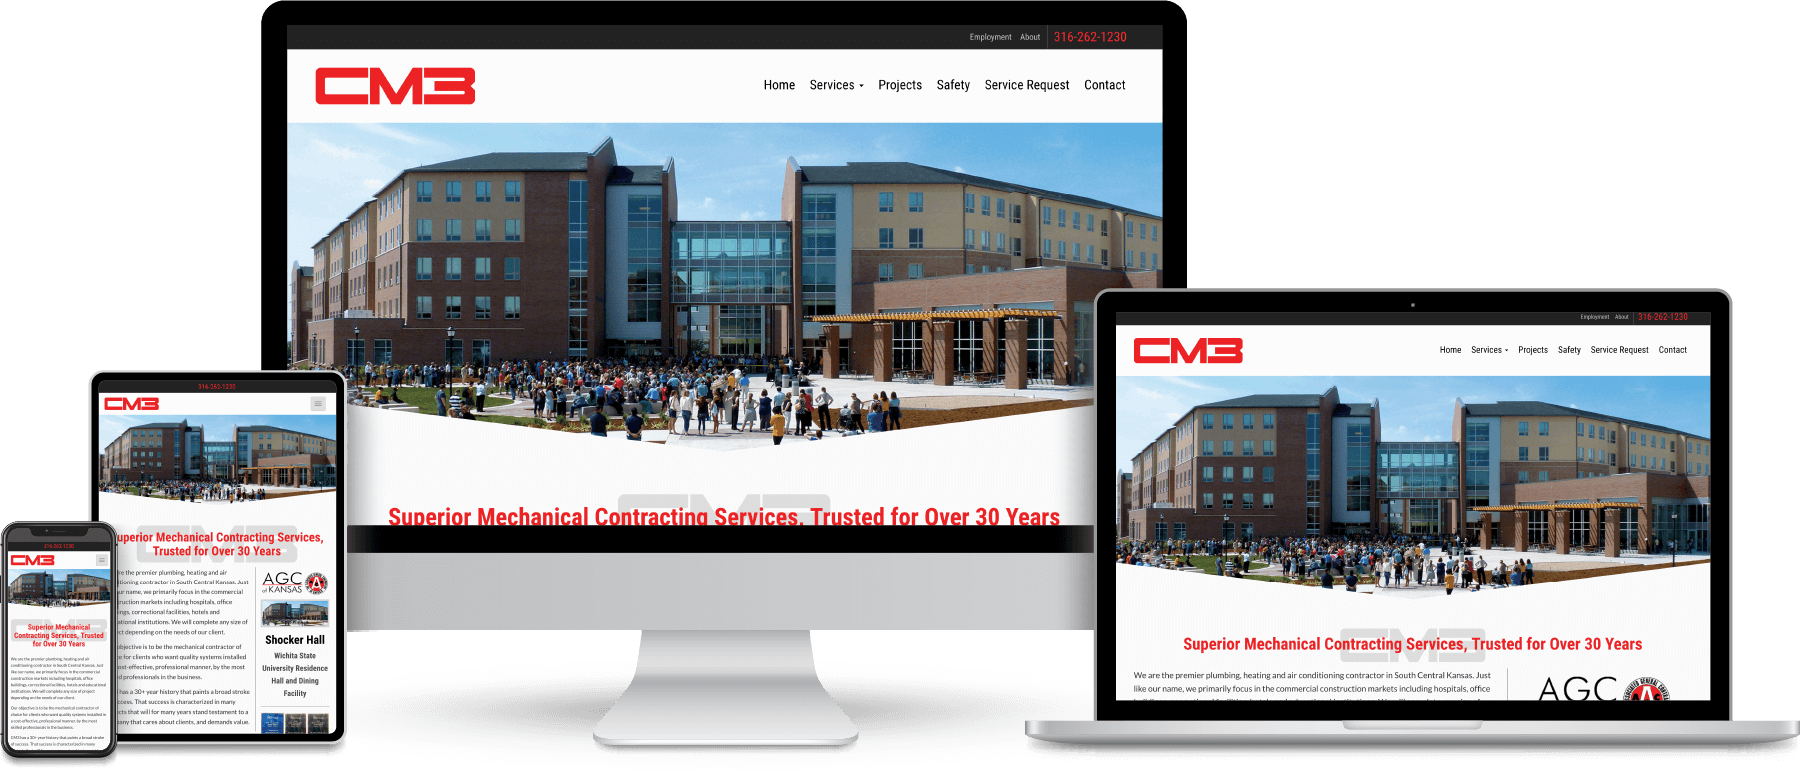 CM3 website shown on desktop, laptop, tablet and mobile devices.